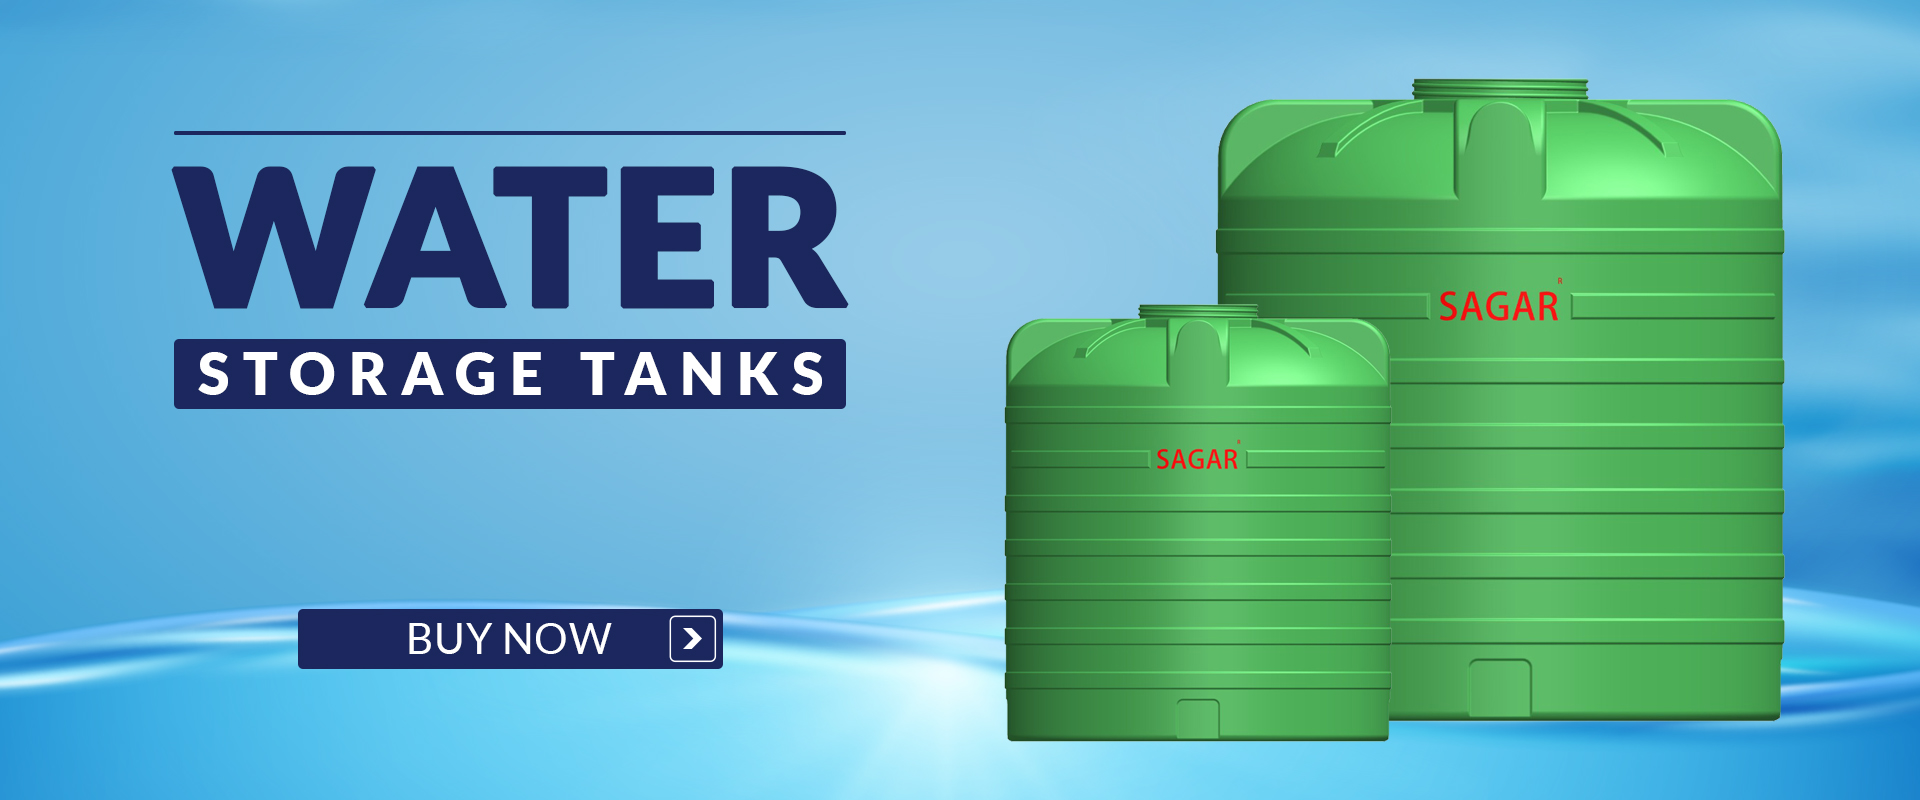 Water_Tank_Banner1